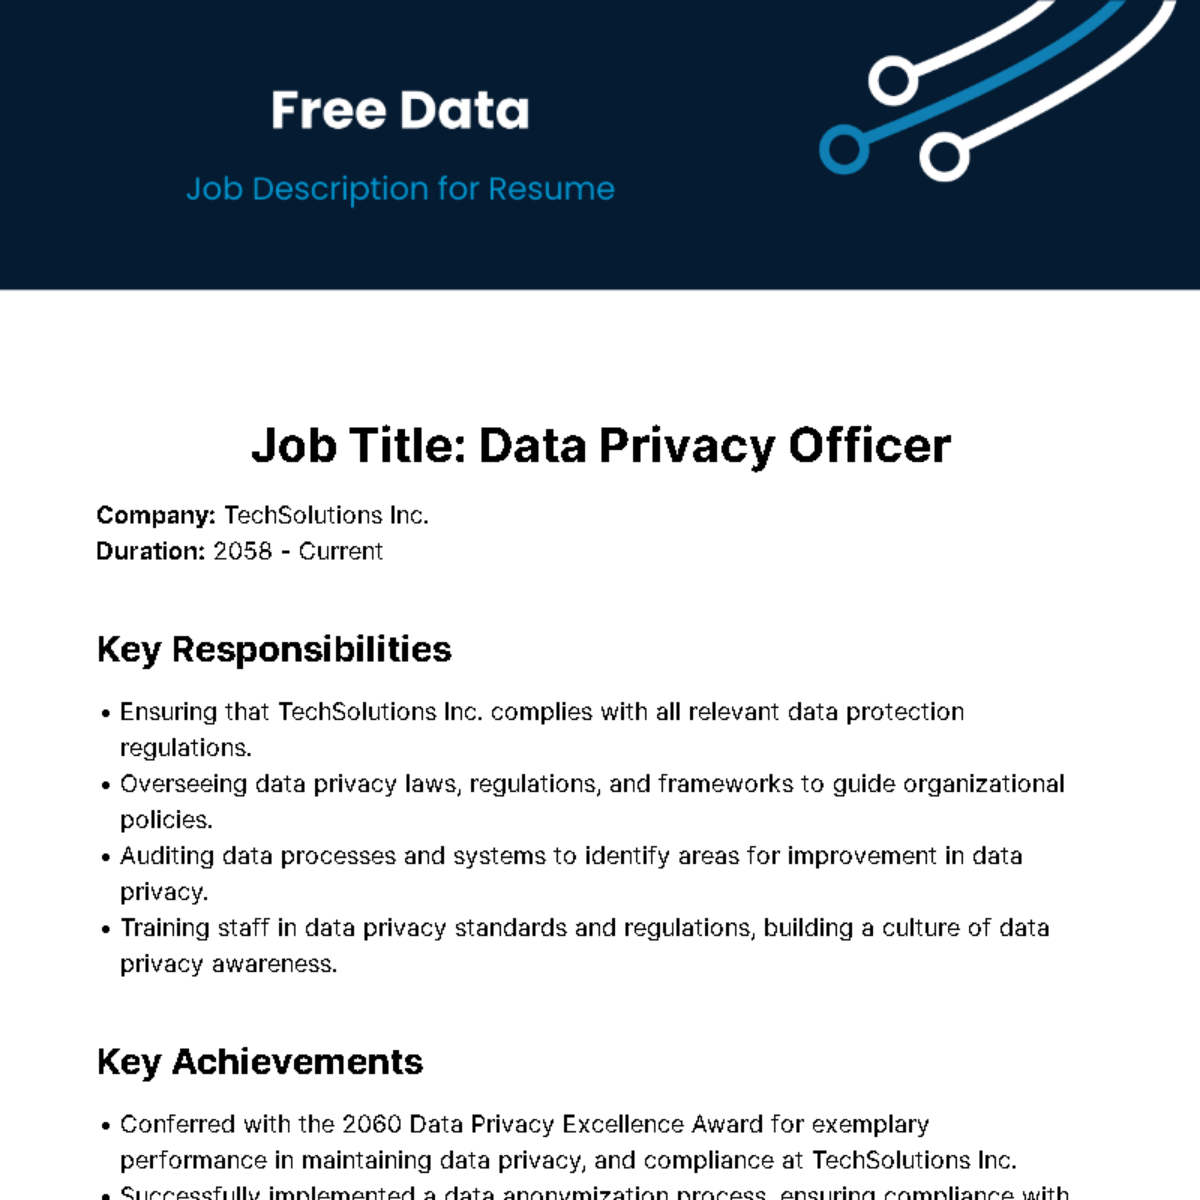 Free Data Job Description for Resume Template